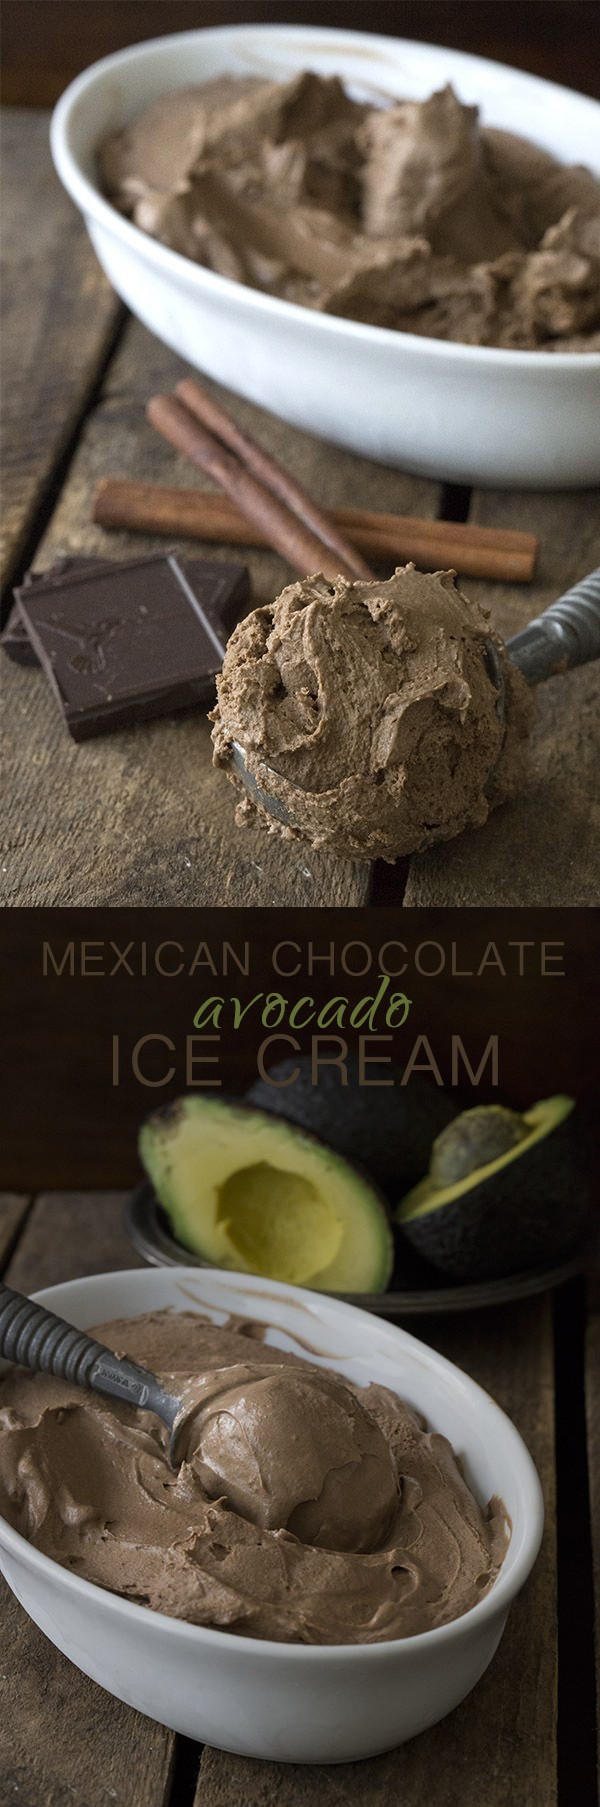 Mexican Chocolate Avocado Ice Cream